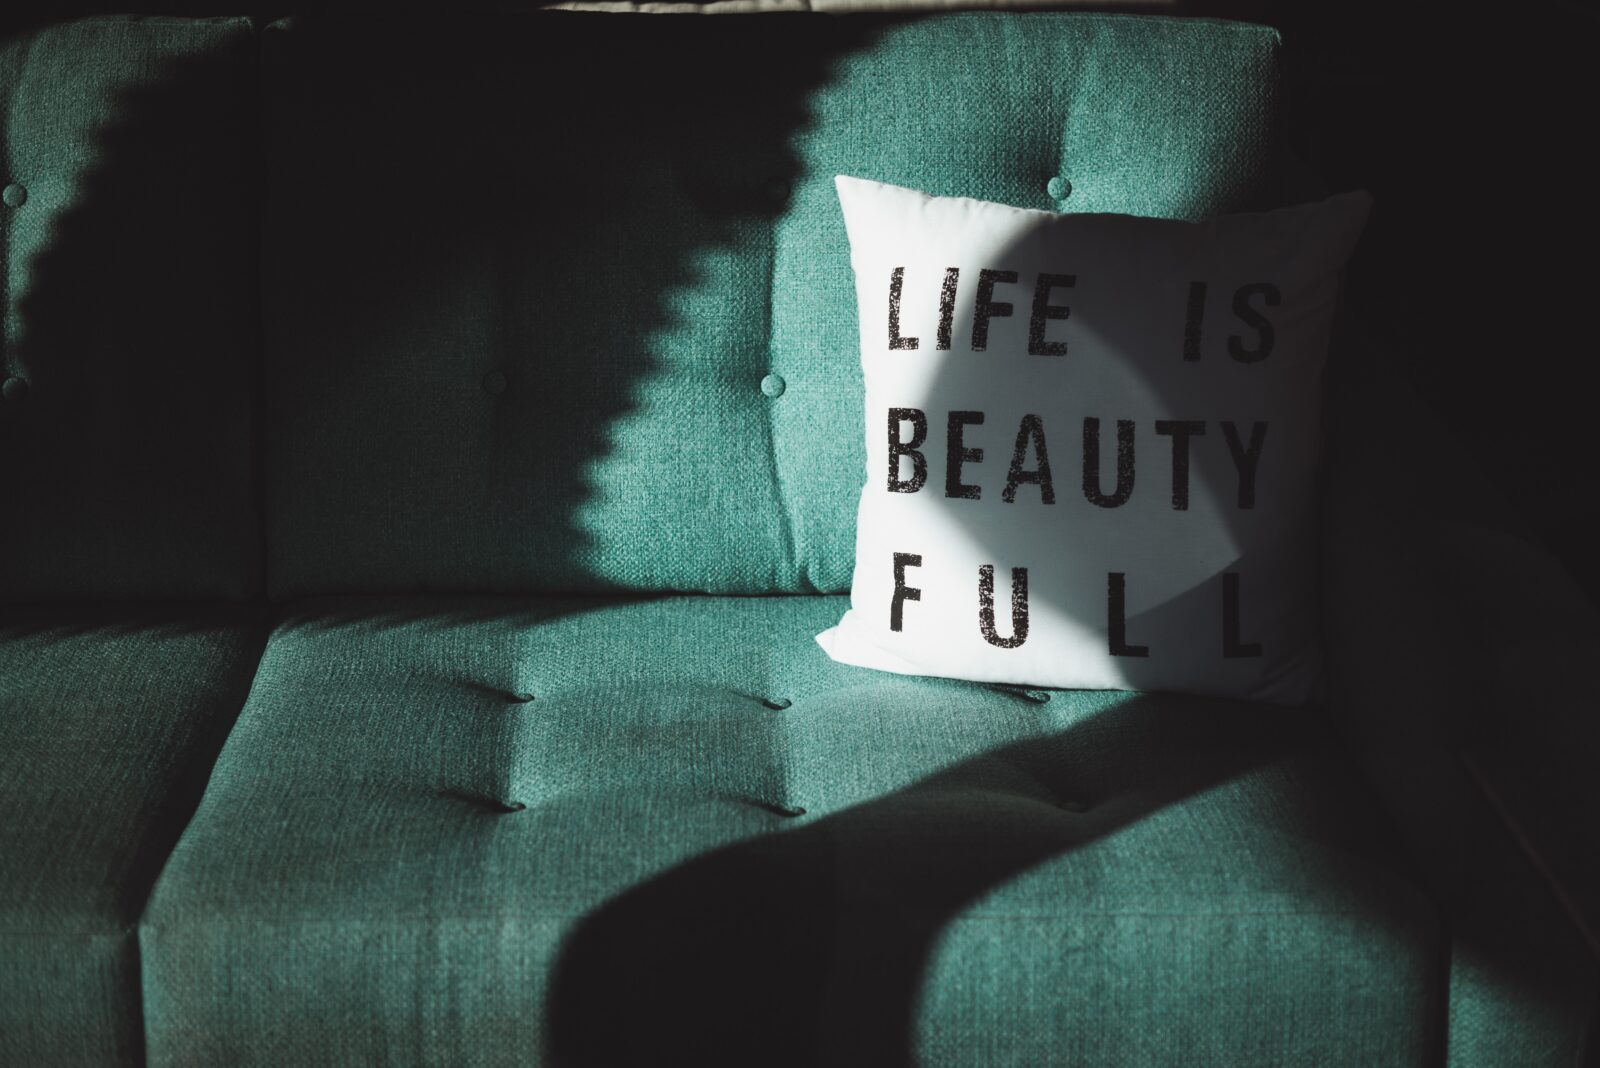 life is beauty full